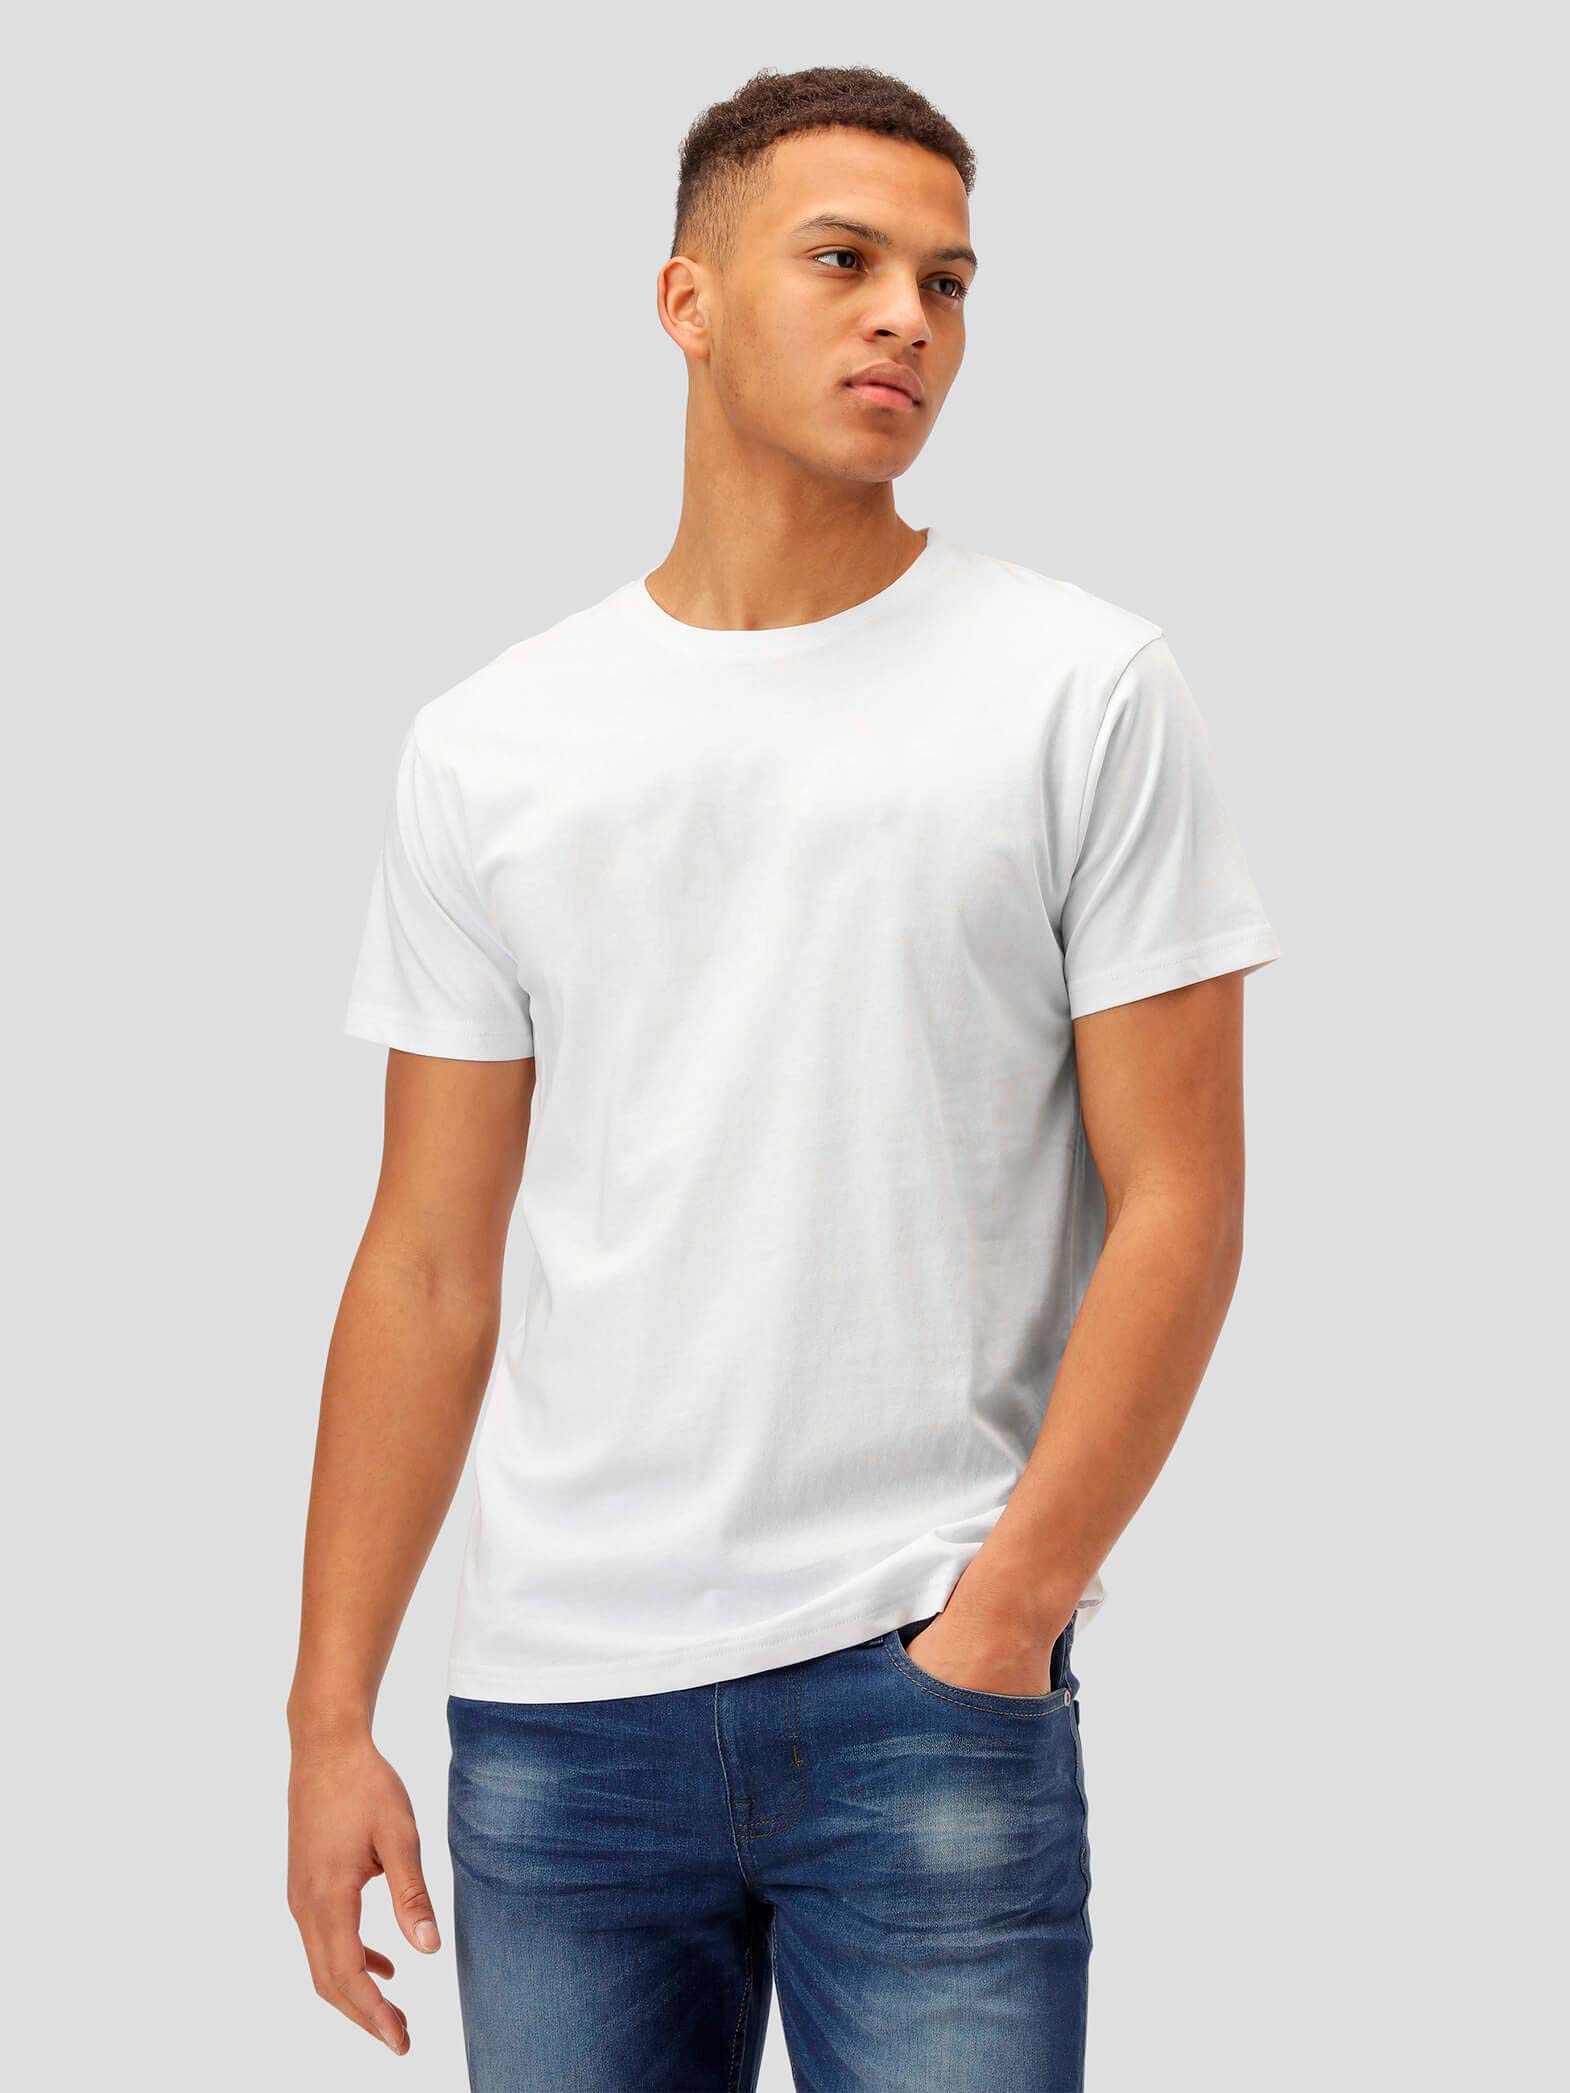 aktivitet Drejning nikkel Marcus - Basic t-shirt i hvid